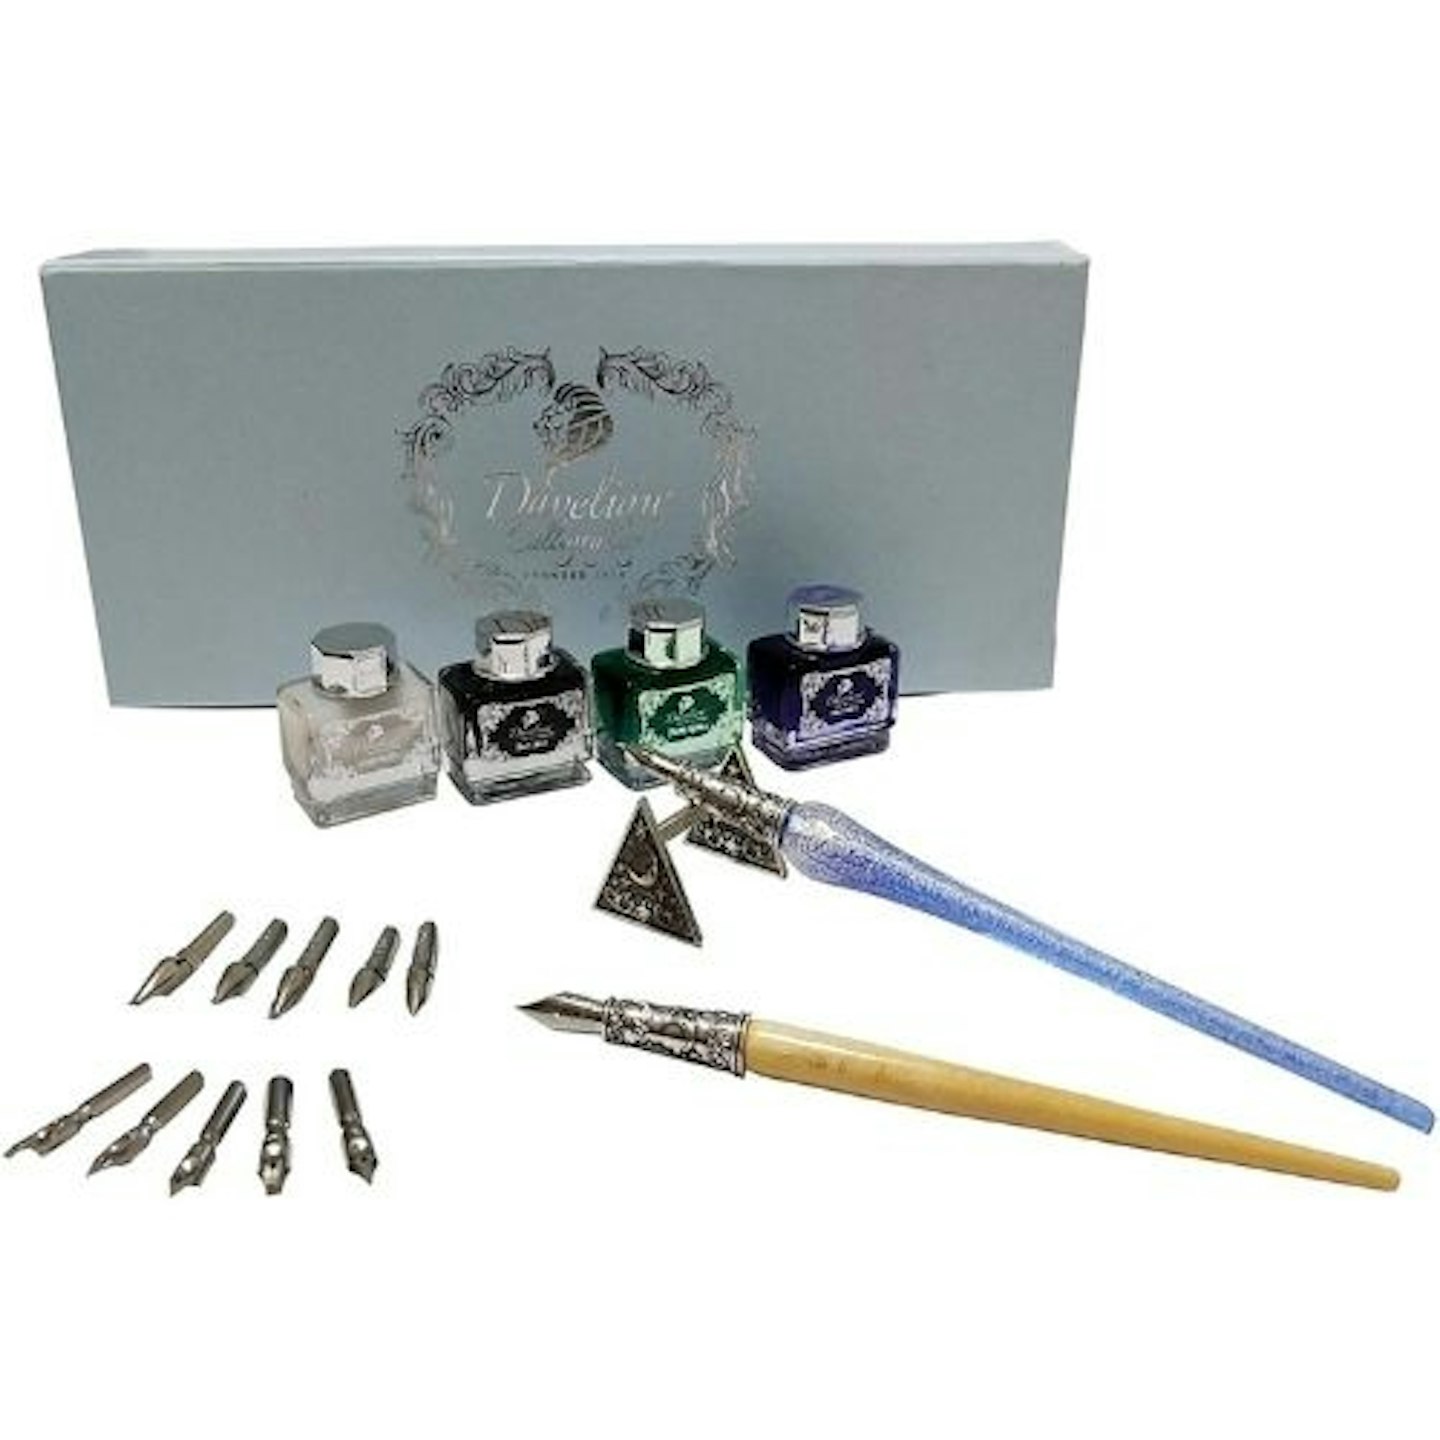 Daveliou Calligraphy Pen Set - 17 Piece Kit